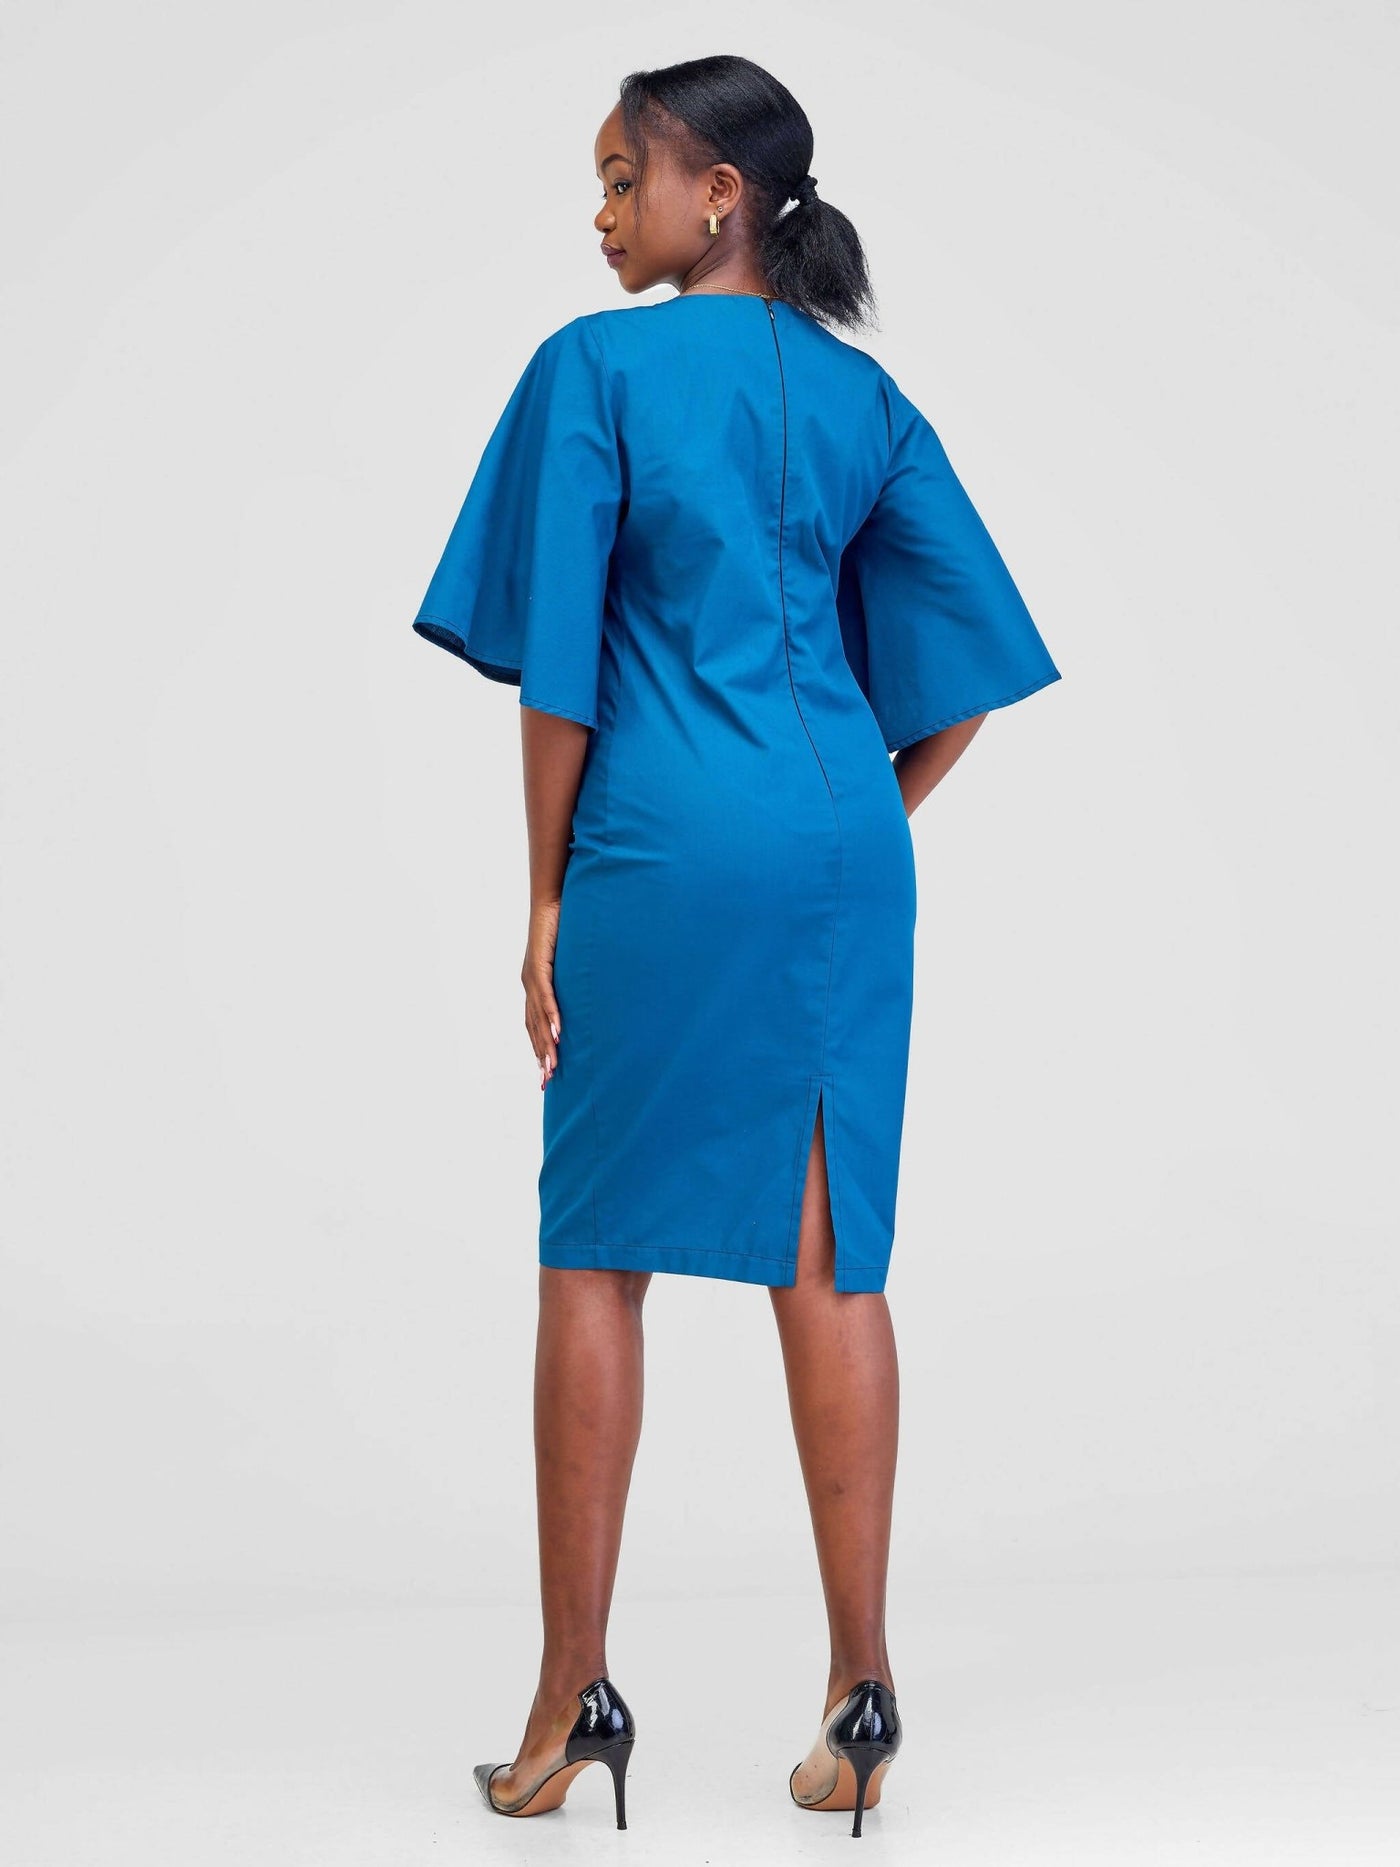 Timyt Urban Wear - Azure Ease Summer Dress - Teal - Shopzetu